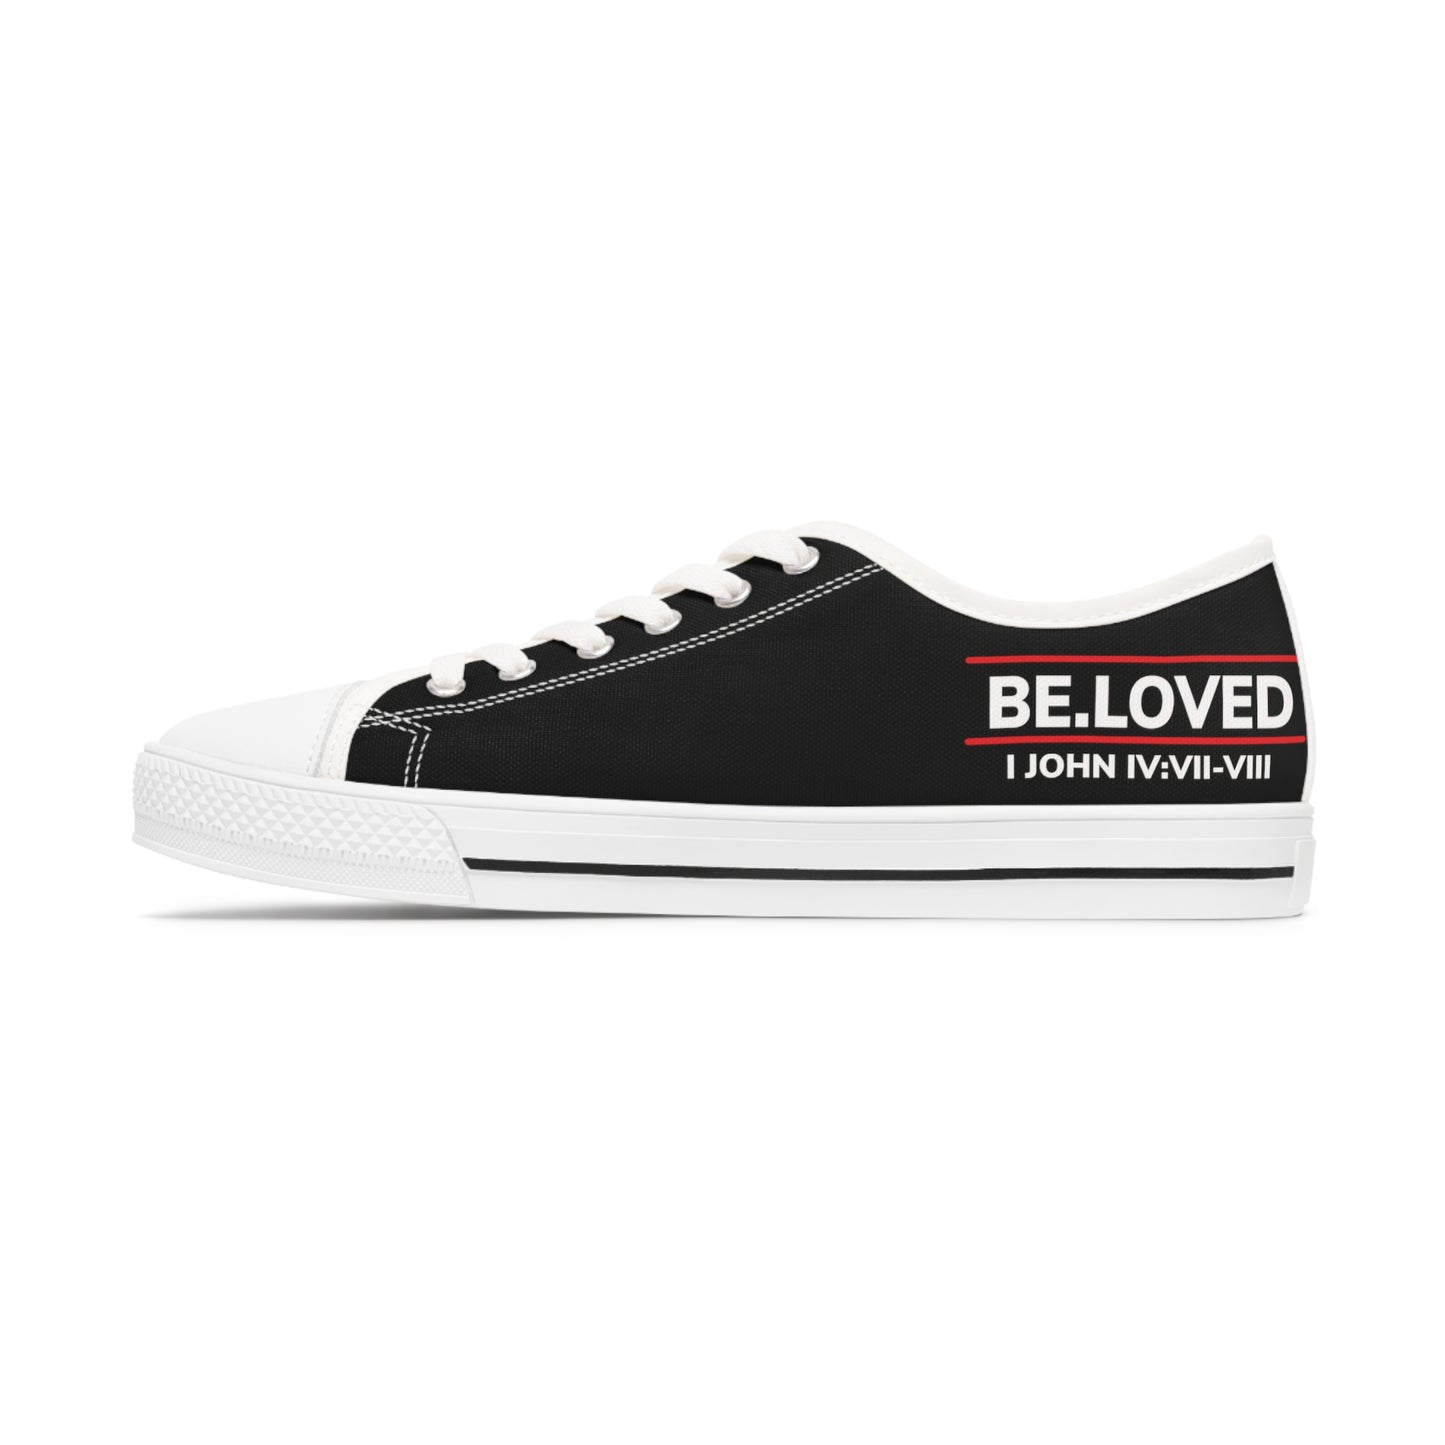 BE.LOVED Women's Low Top Sneakers